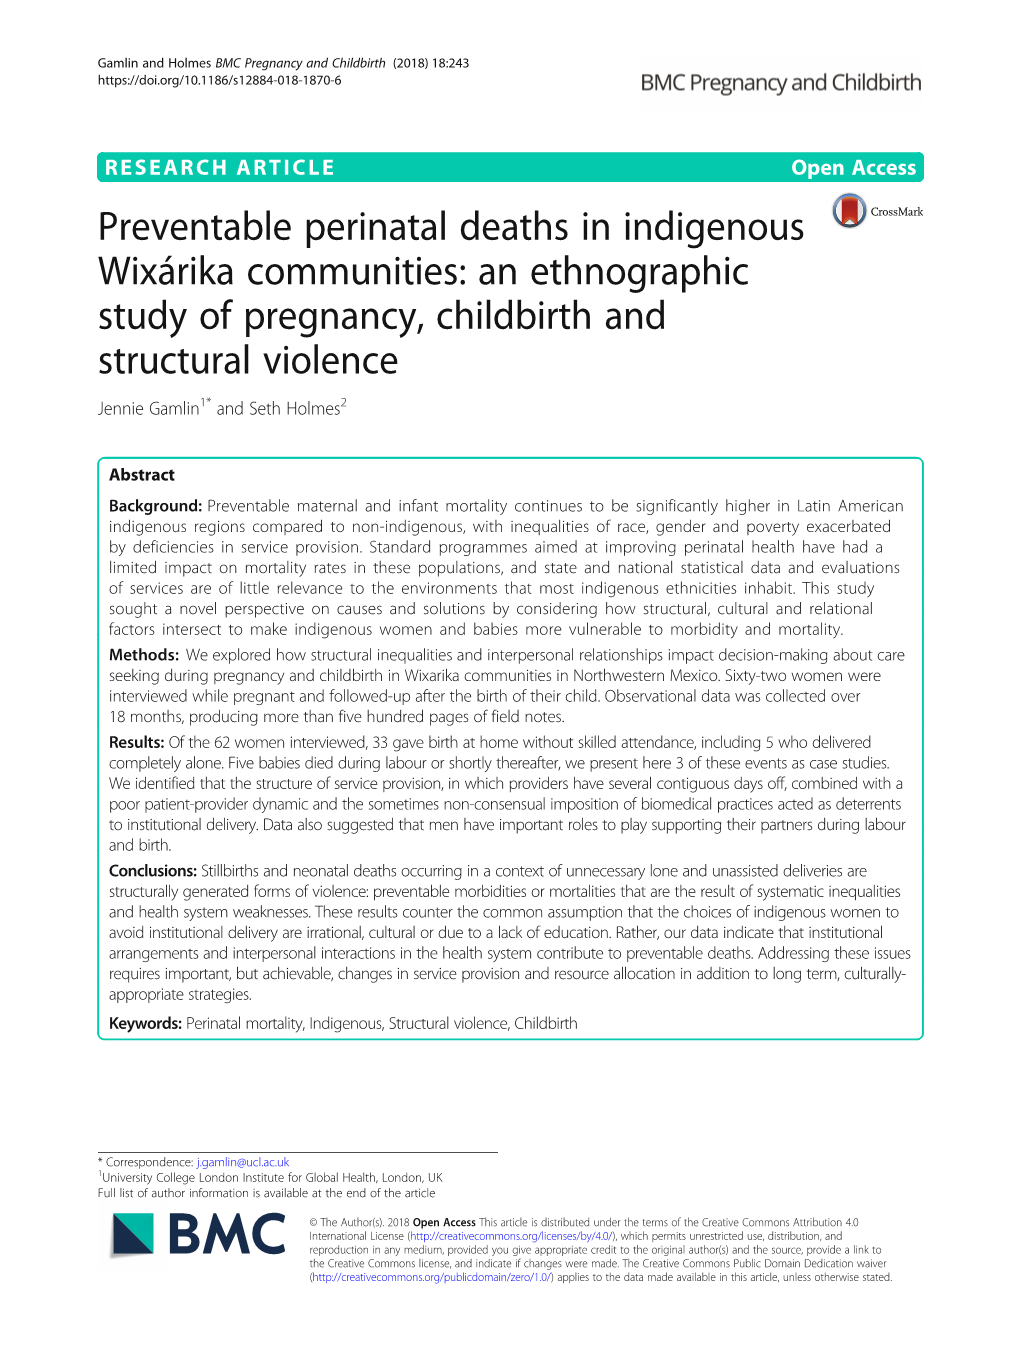 Preventable Perinatal Deaths in Indigenous Wixárika Communities